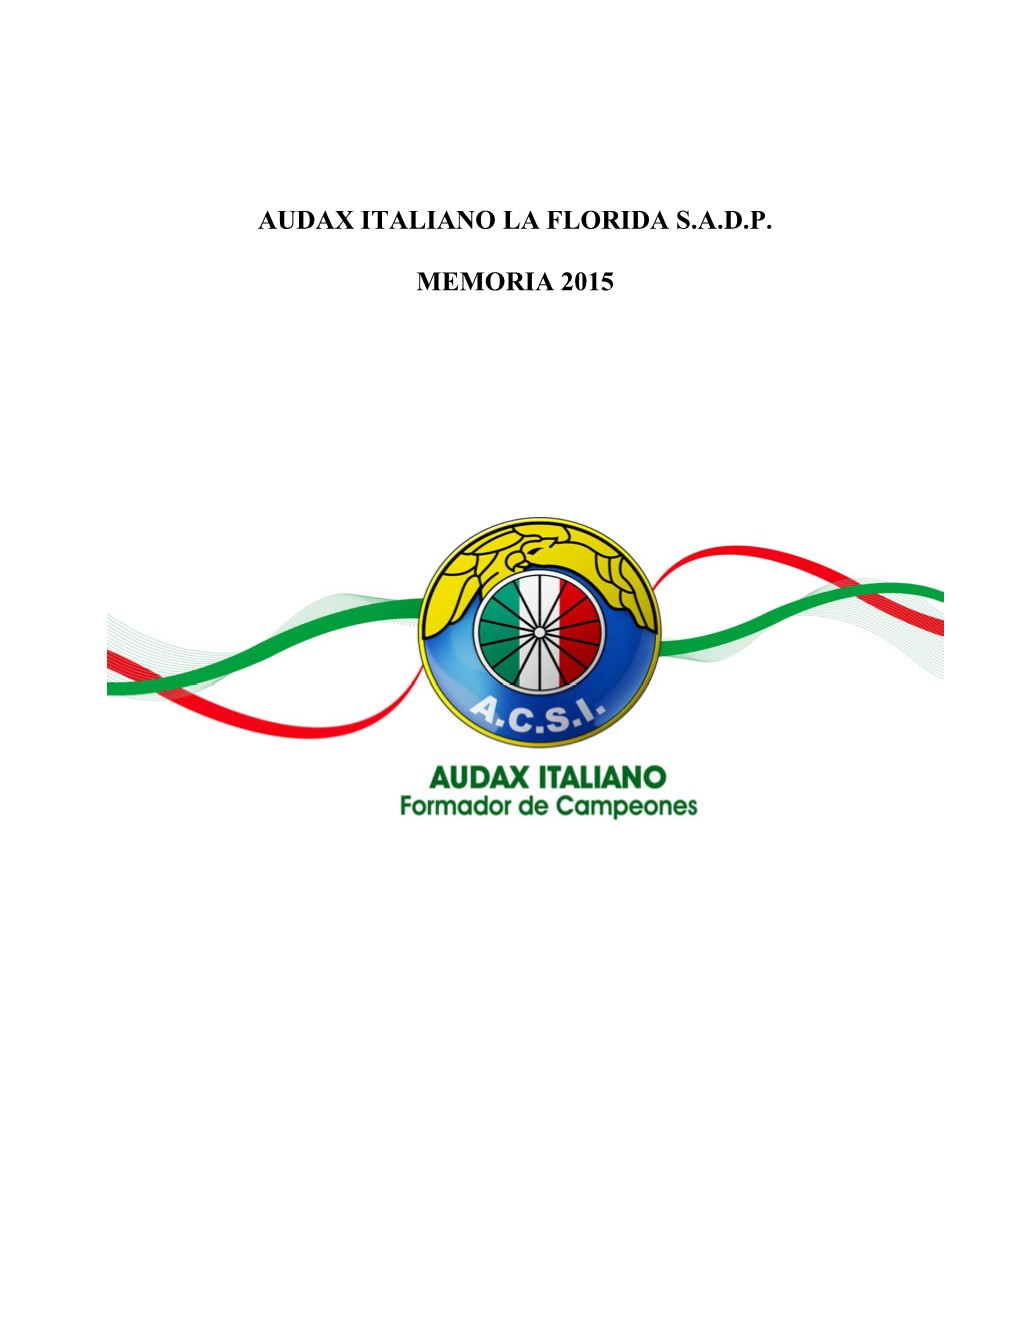 Audax Italiano La Florida S.A.D.P. Memoria 2015